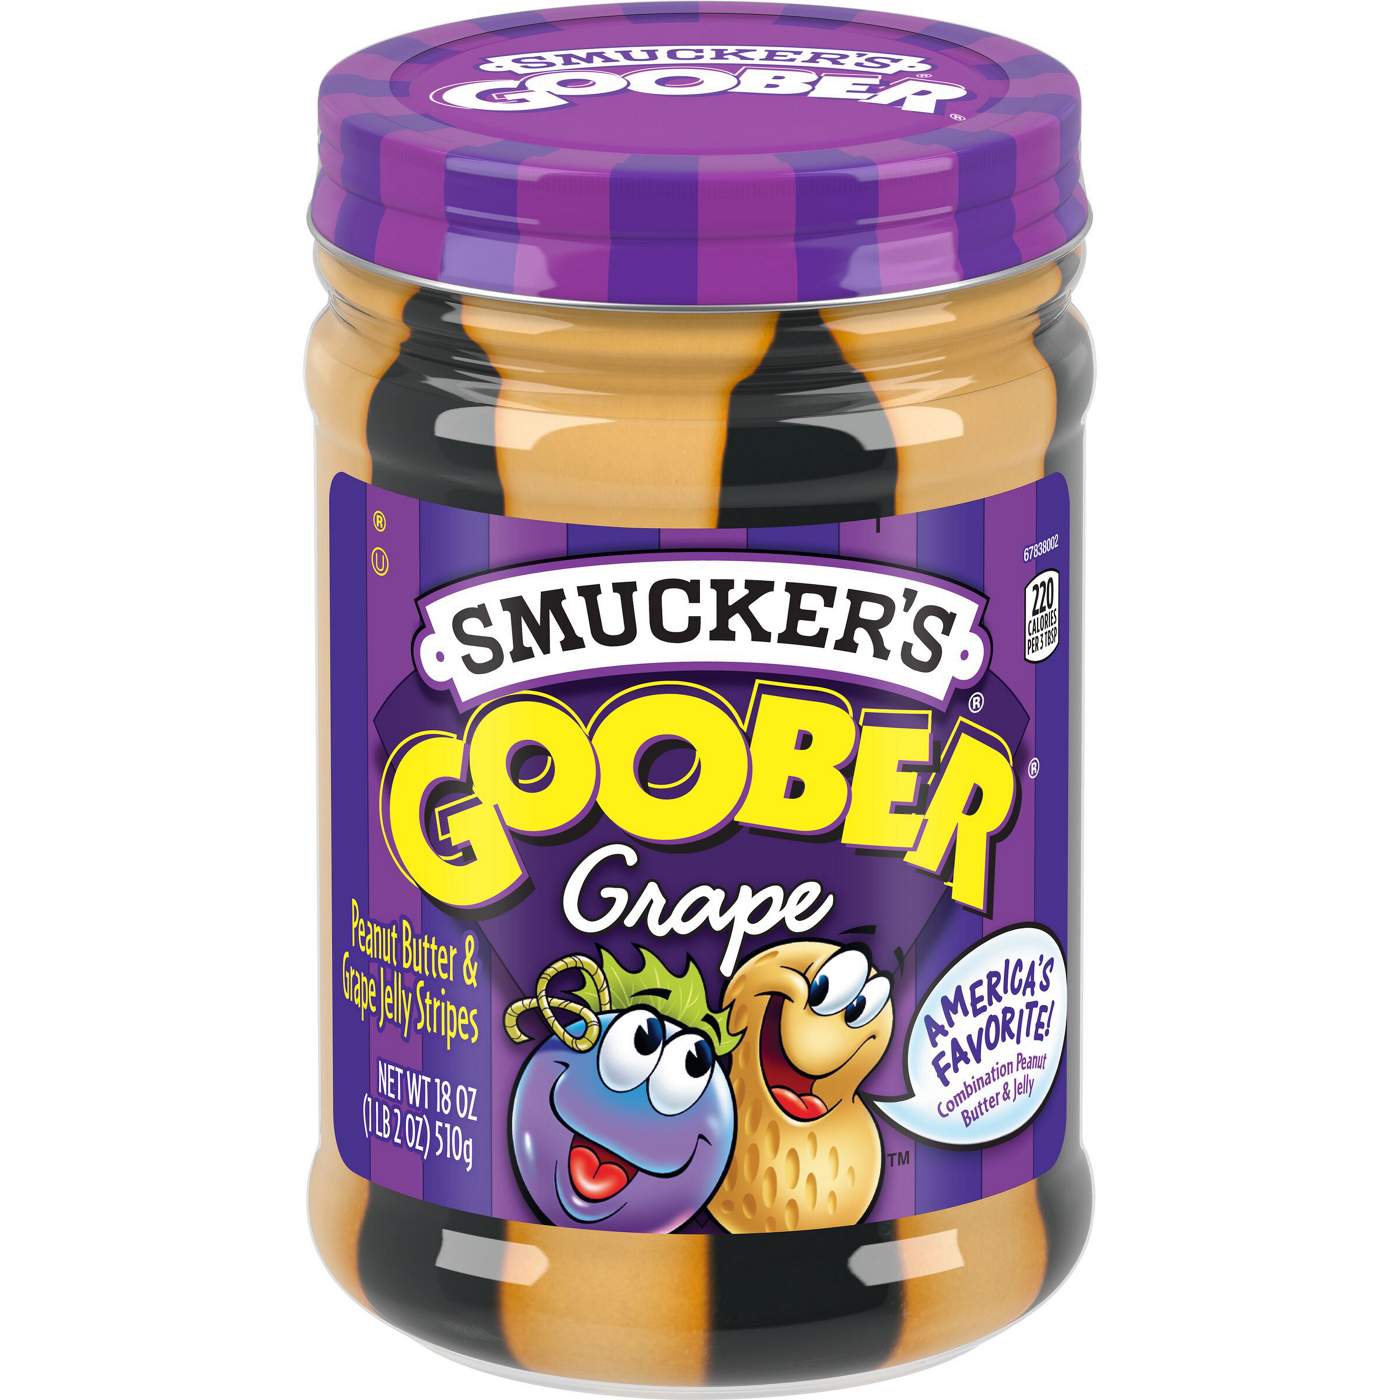 Smucker's Goober Peanut Butter & Grape Jelly Stripes; image 1 of 3